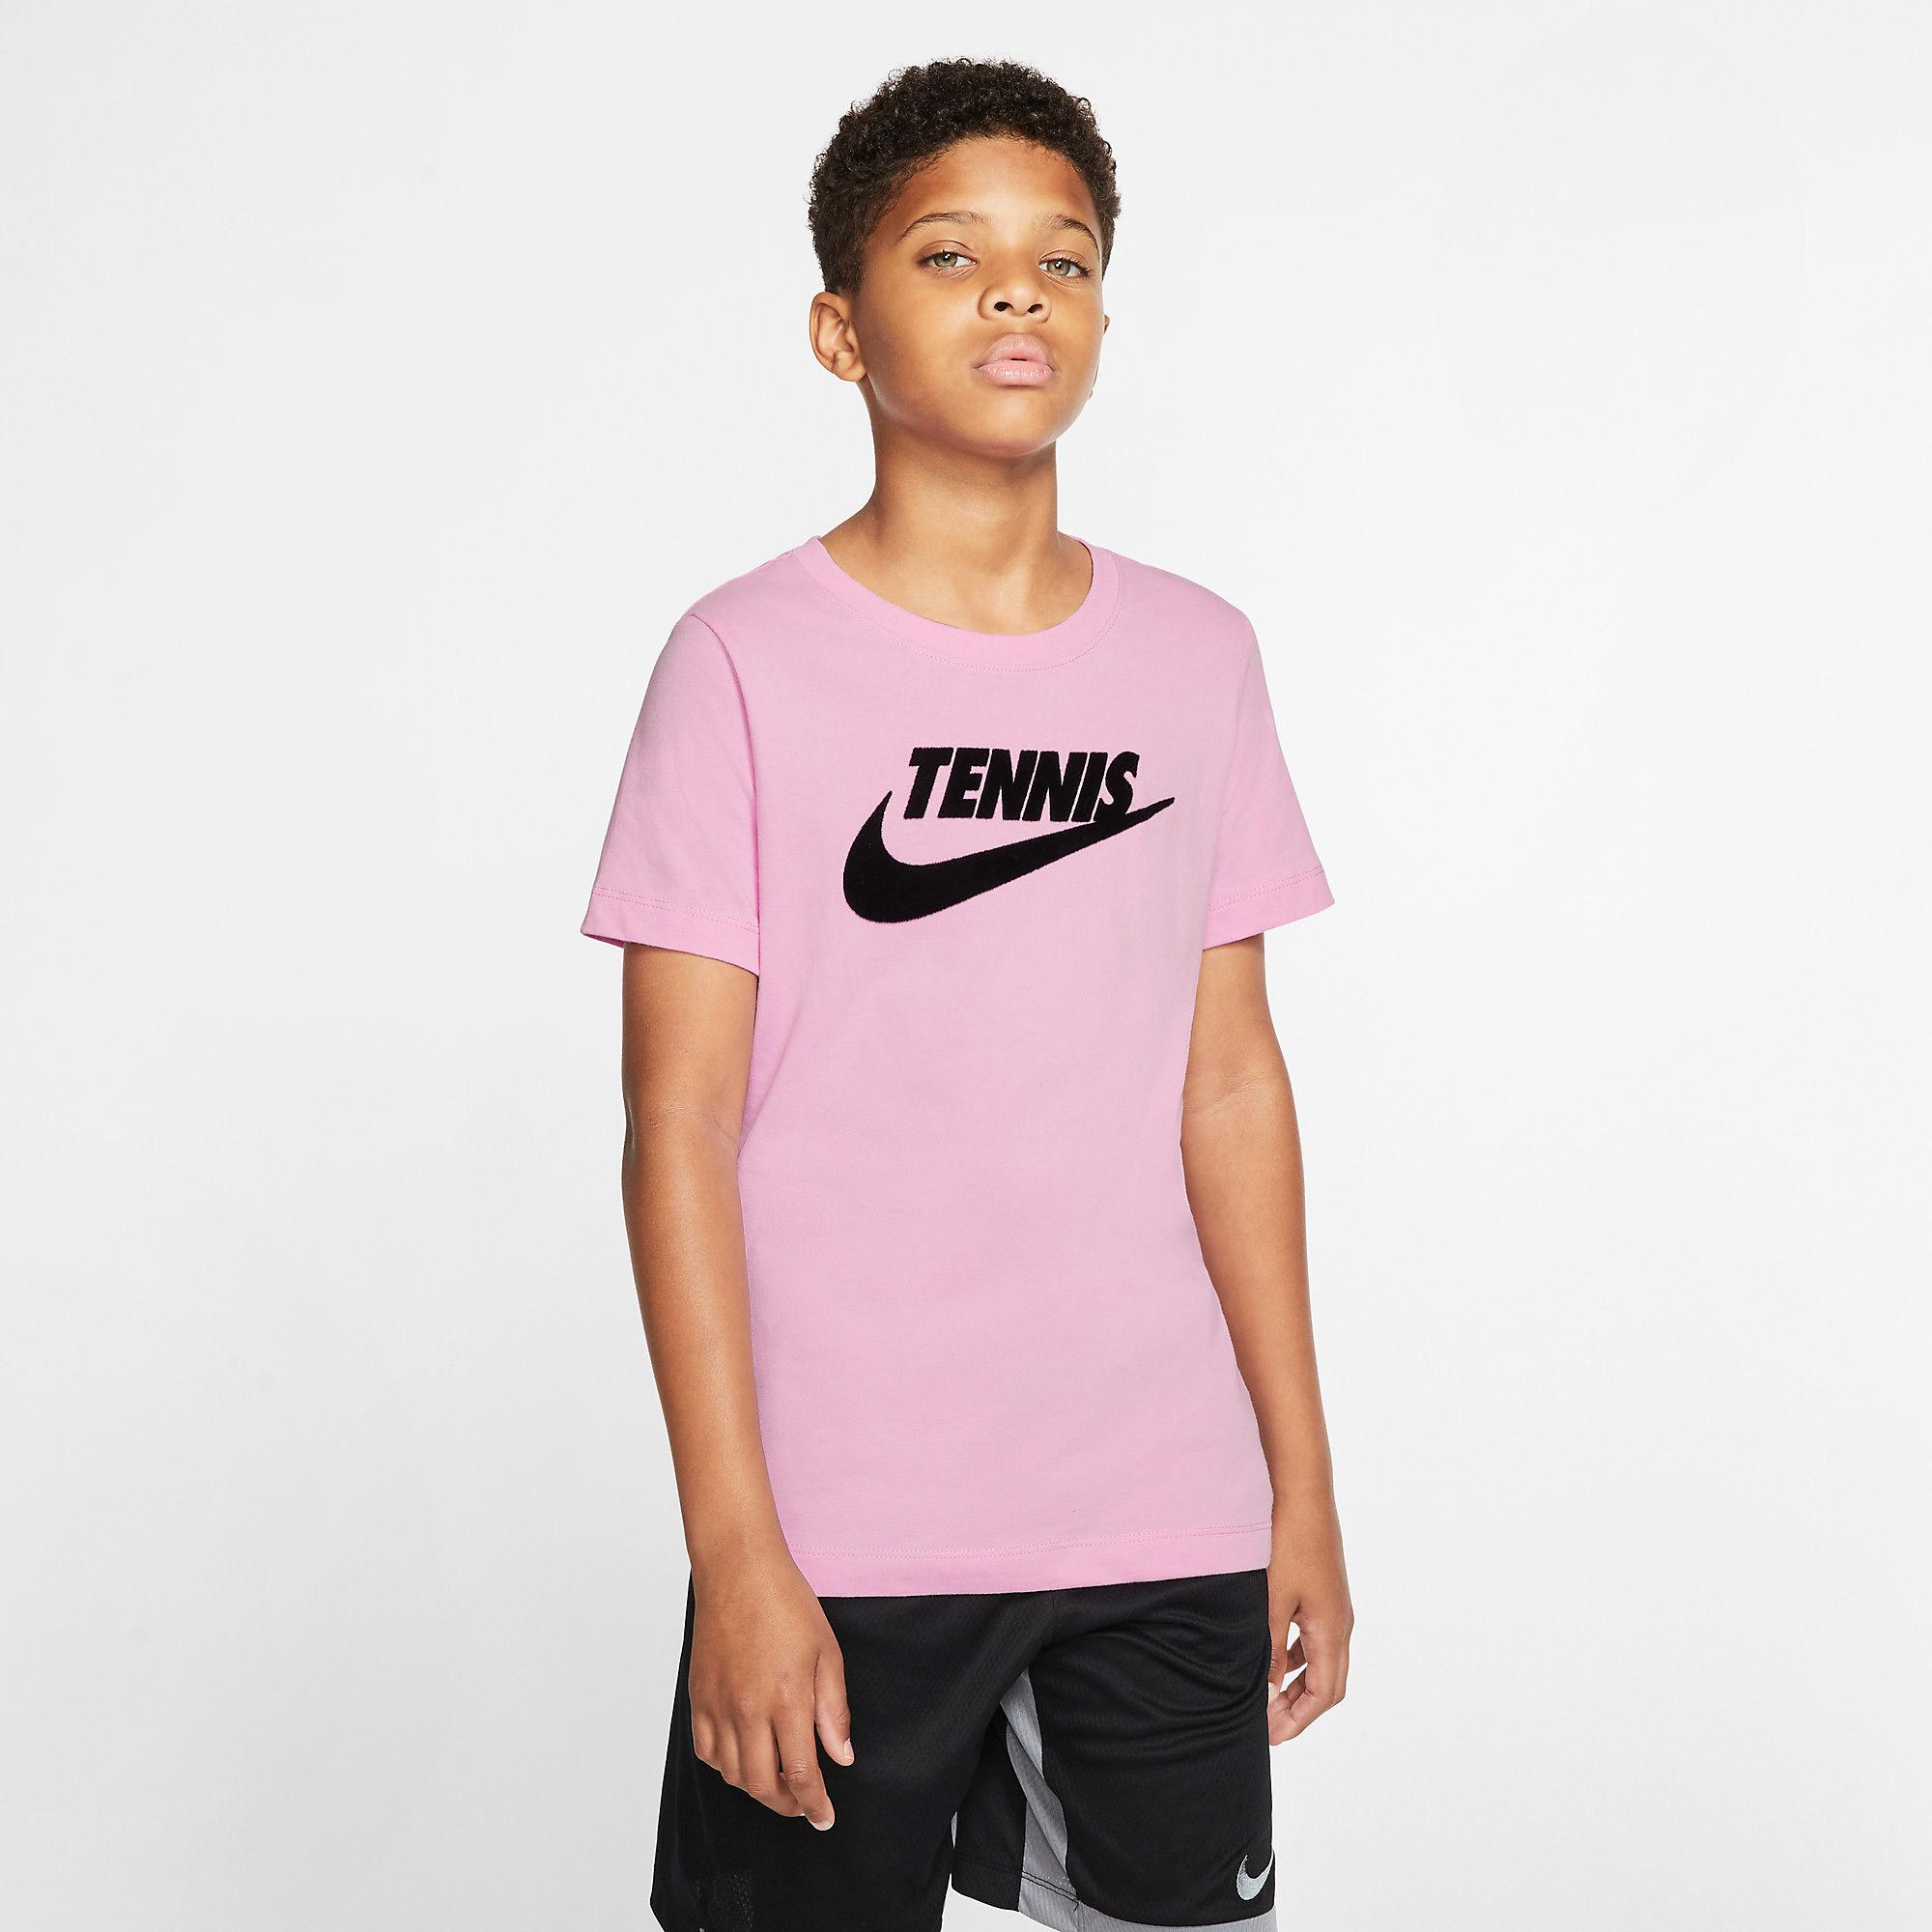 Nike Boys Graphic Tennis T-Shirt - Pink 